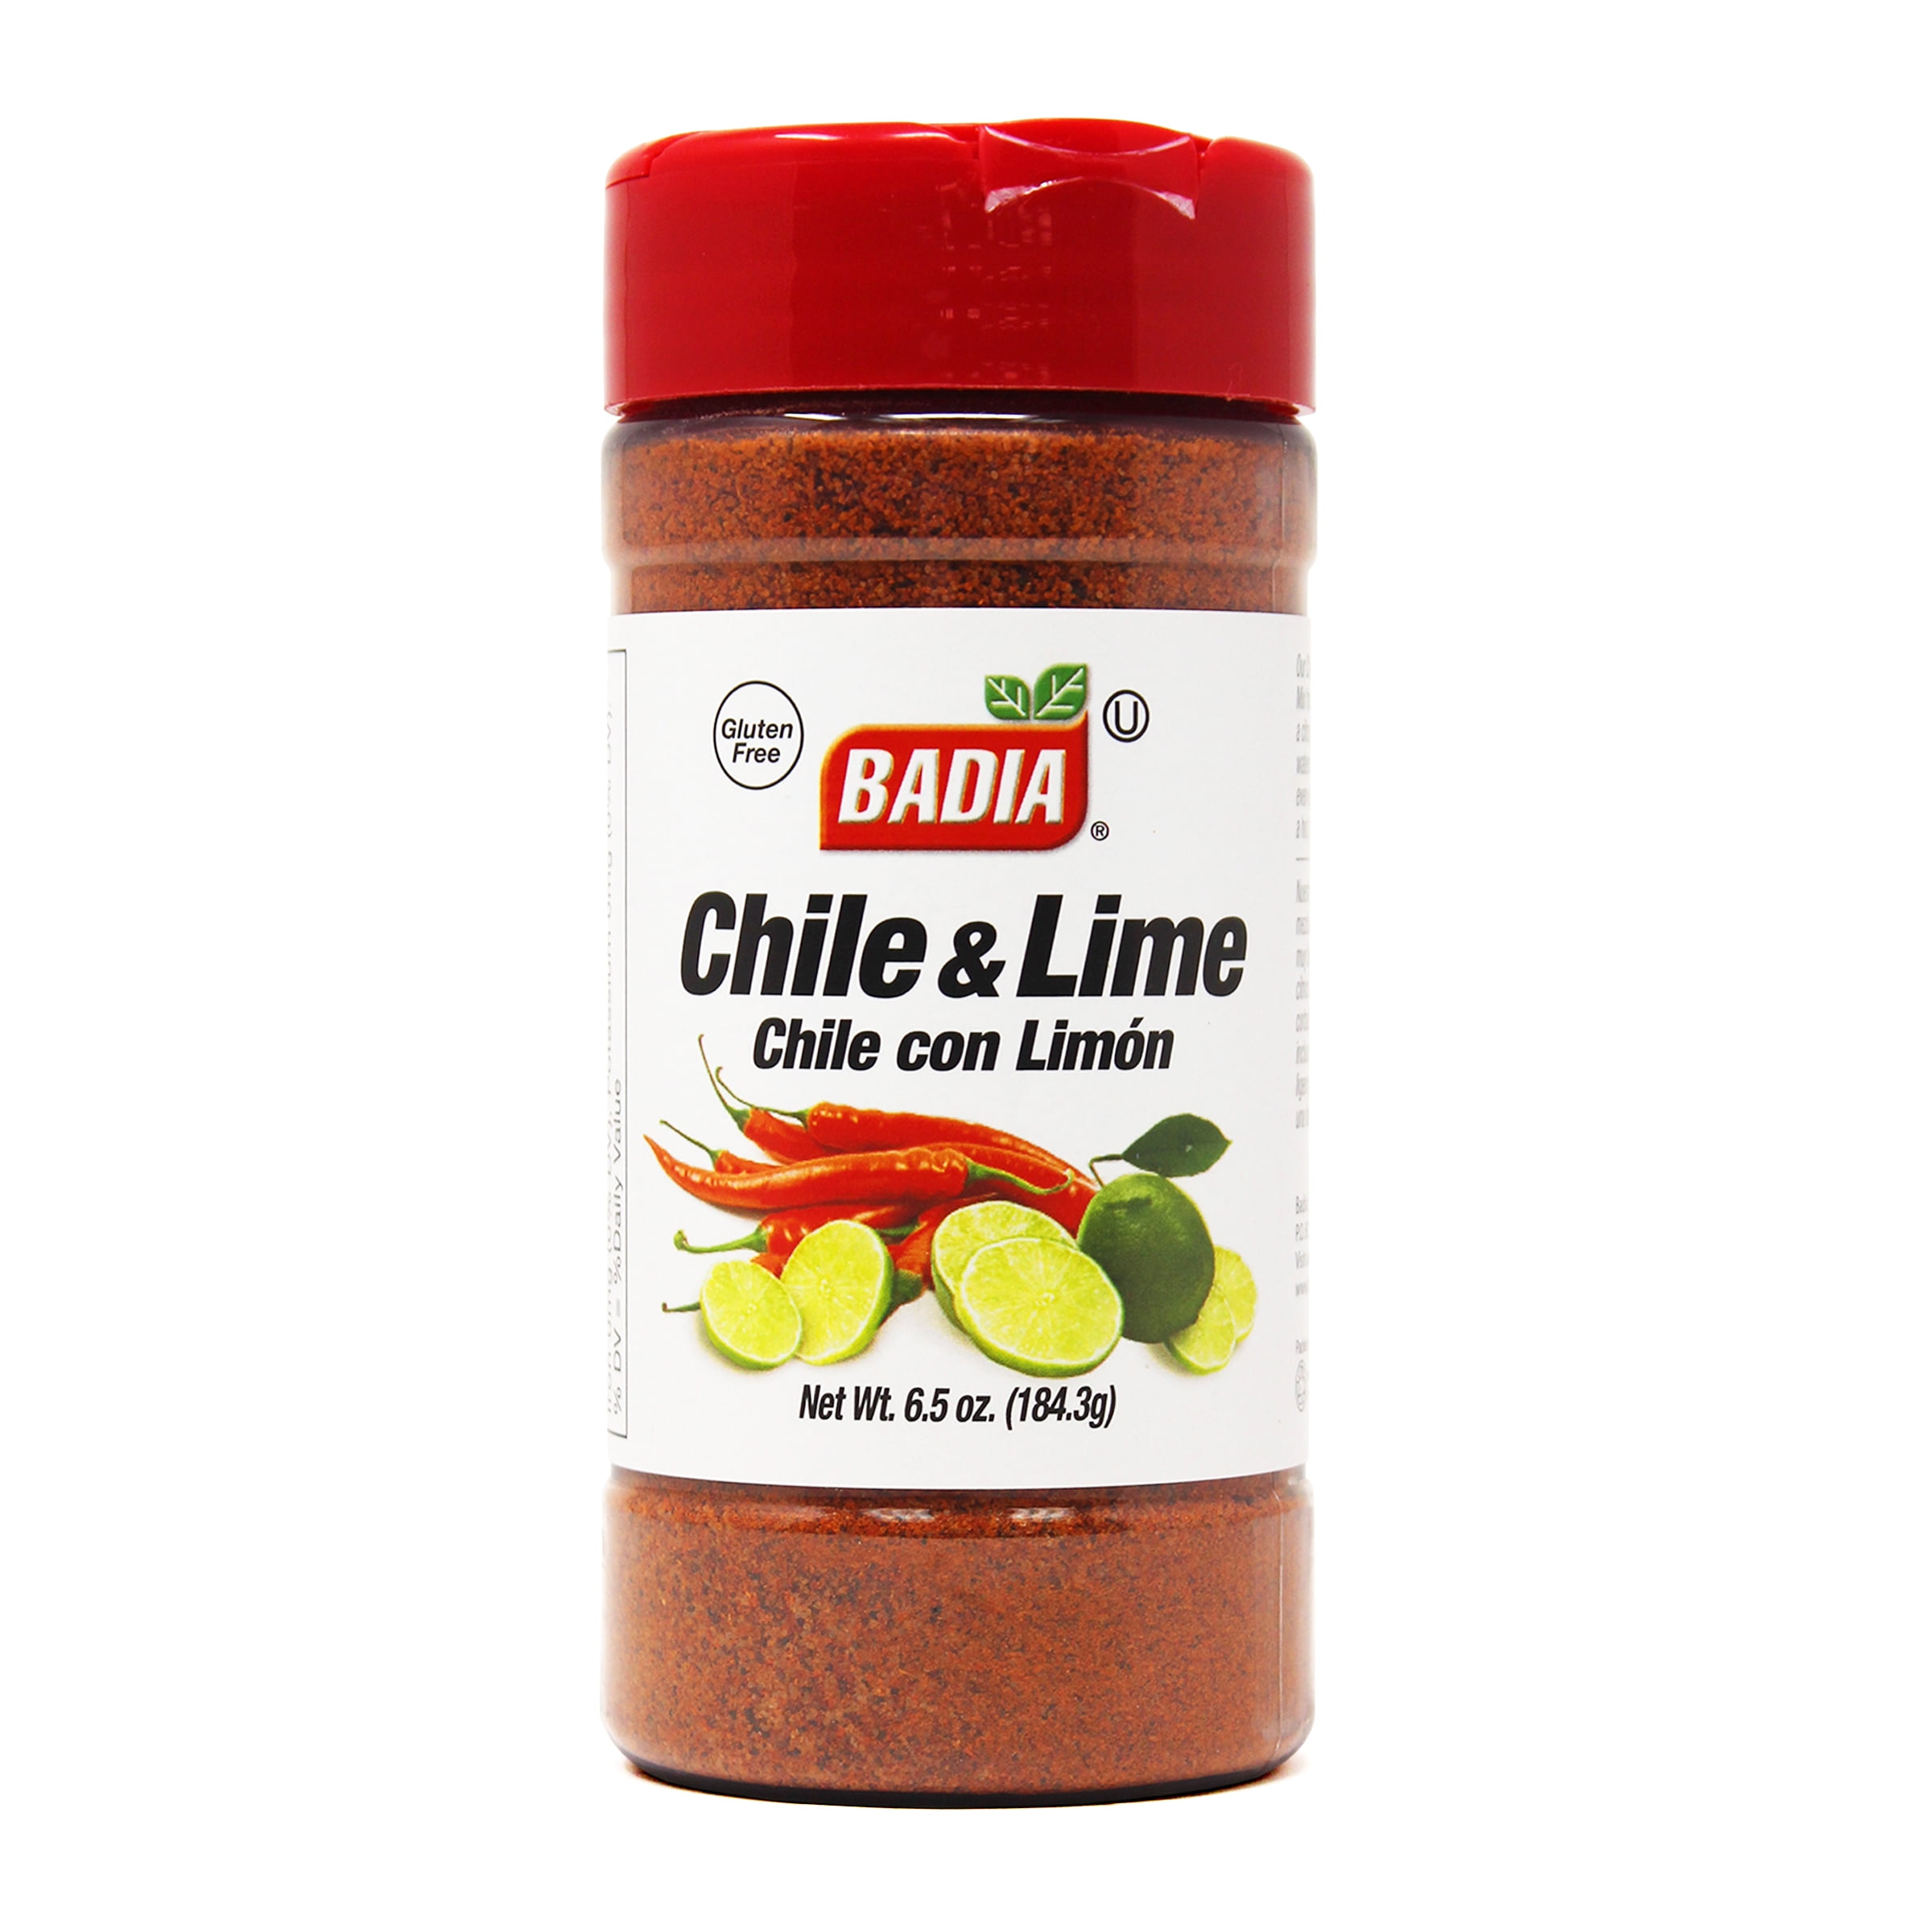 Badia Chile & Lime - 6.5 oz